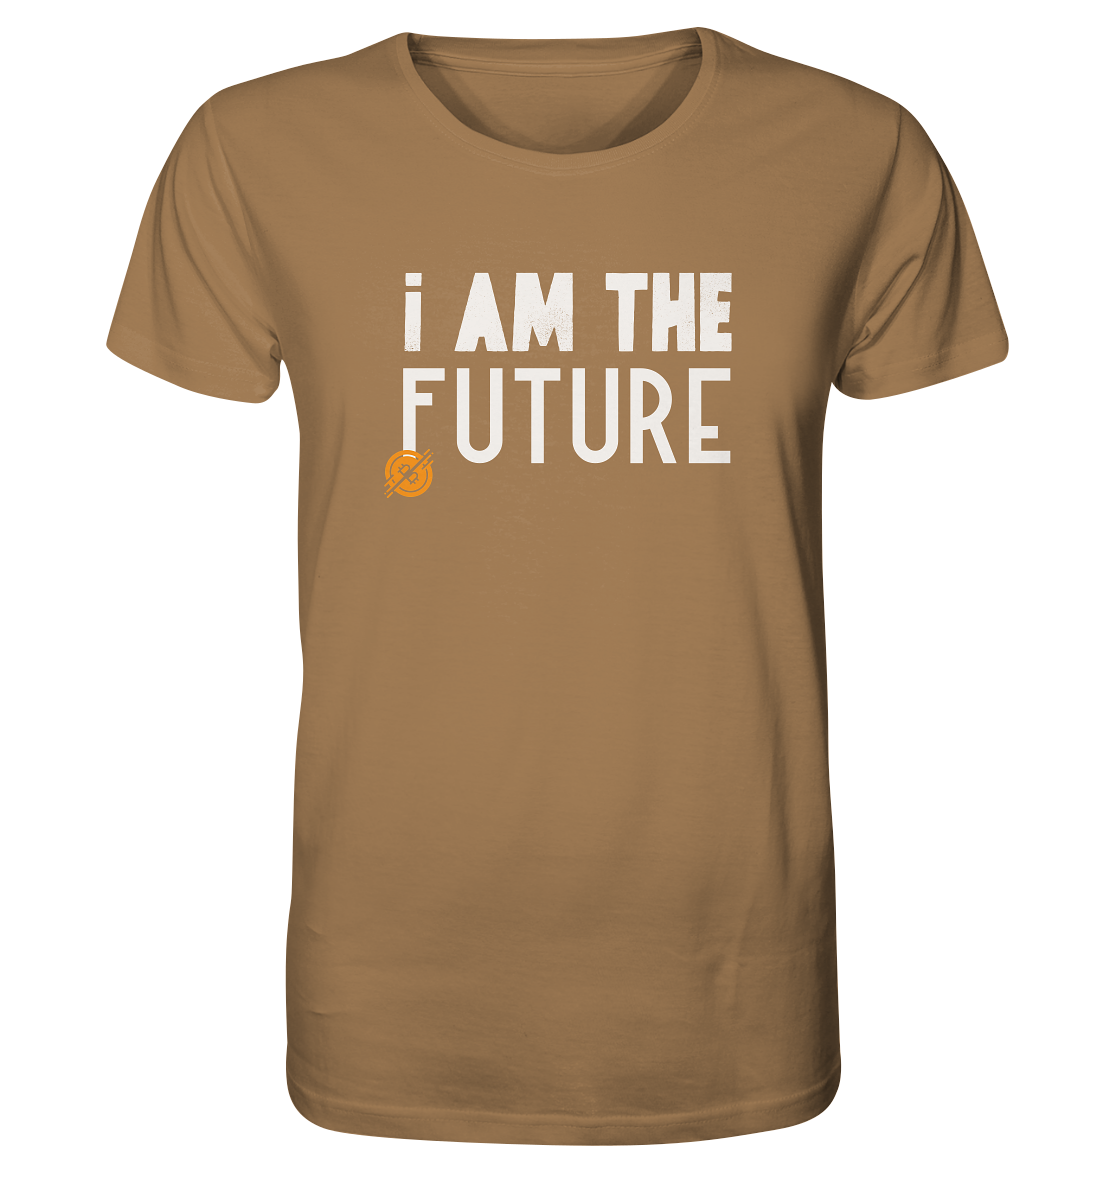 Bitcoin T-Shirt "I am the future" - Organic Shirt